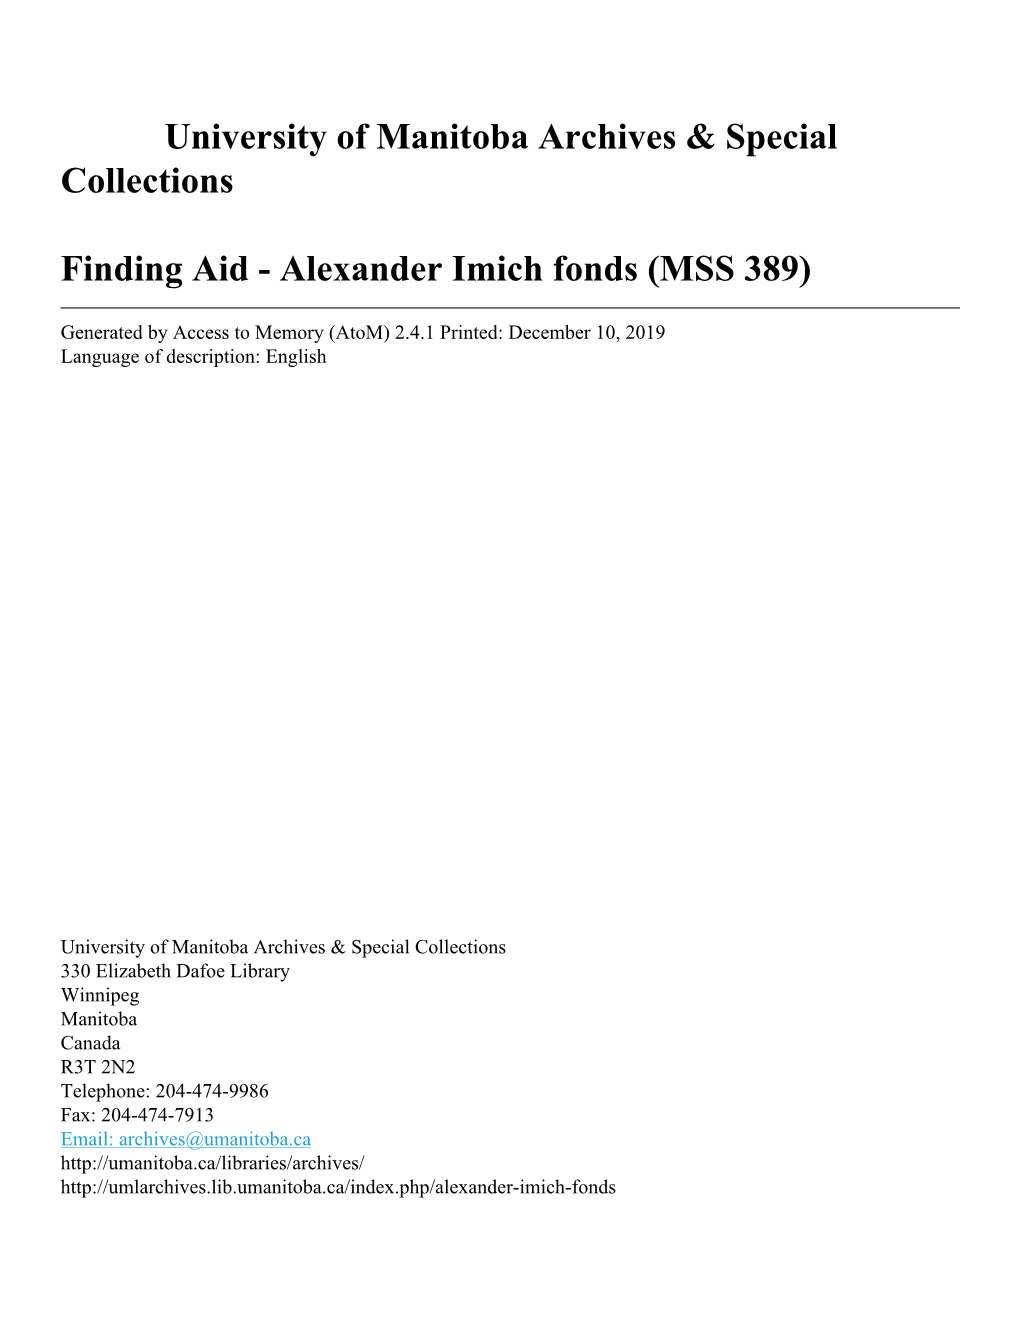 Alexander Imich Fonds (MSS 389)